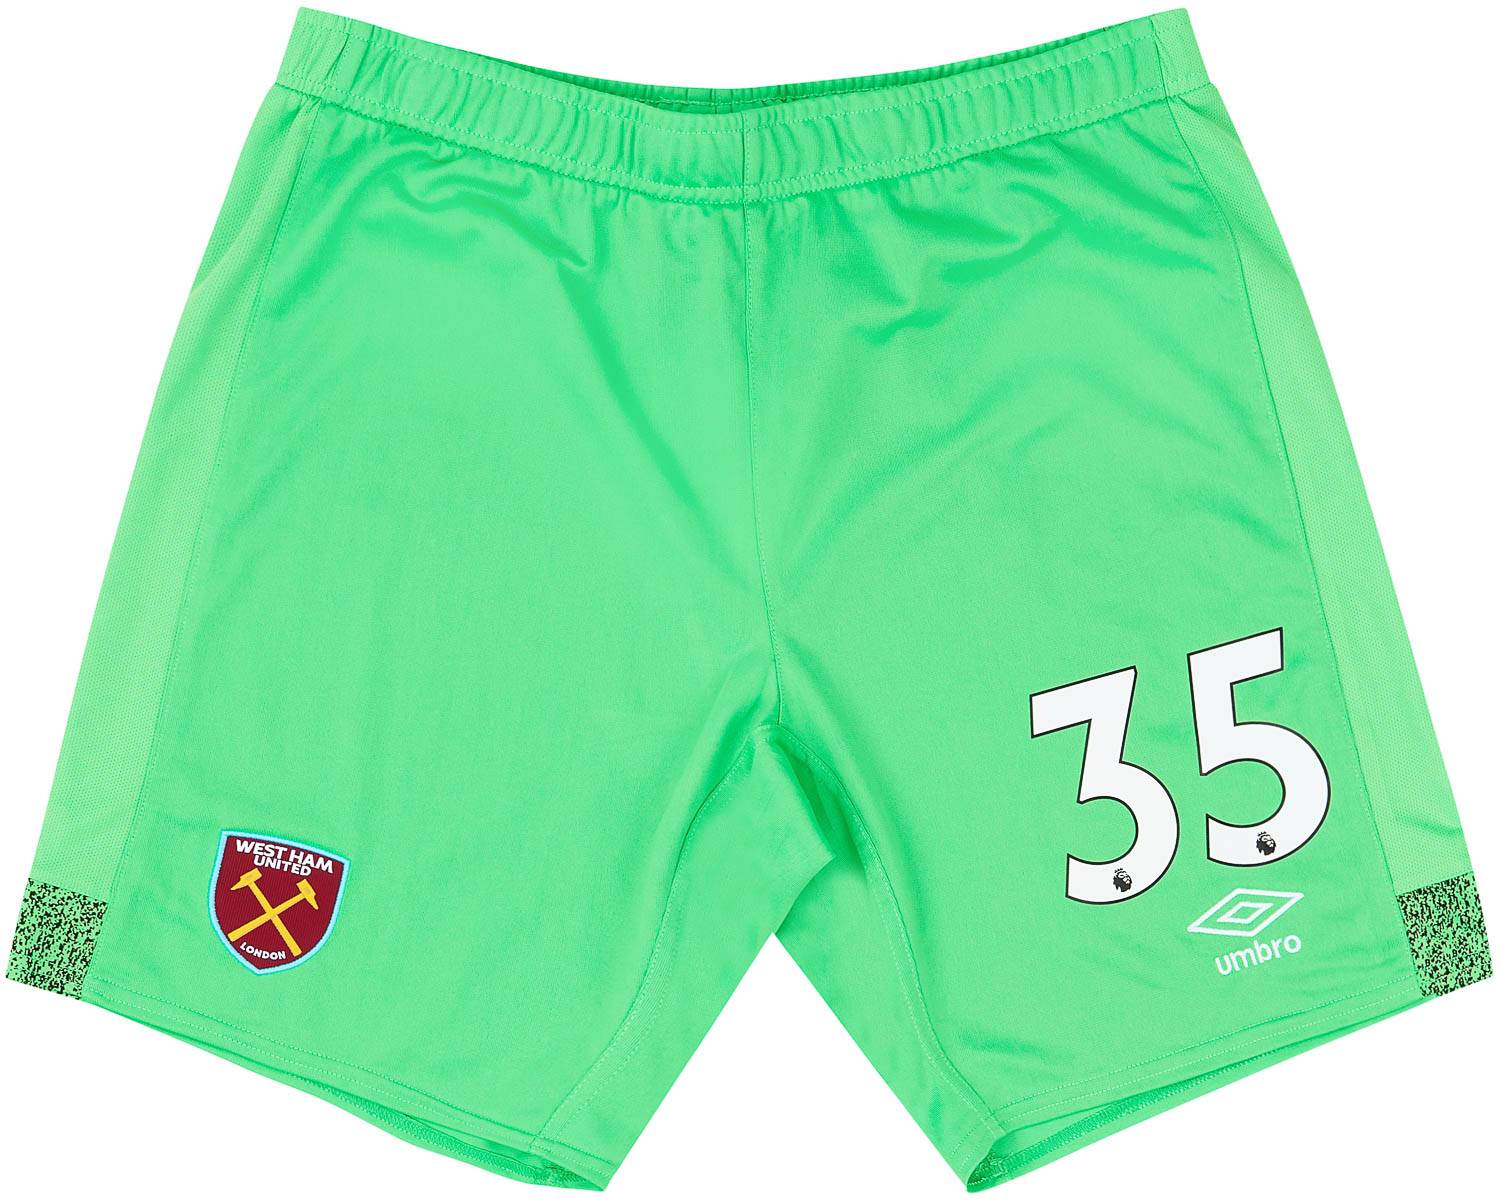 2021-22 West Ham Player Issue GK Shorts #35 (Randolph) L